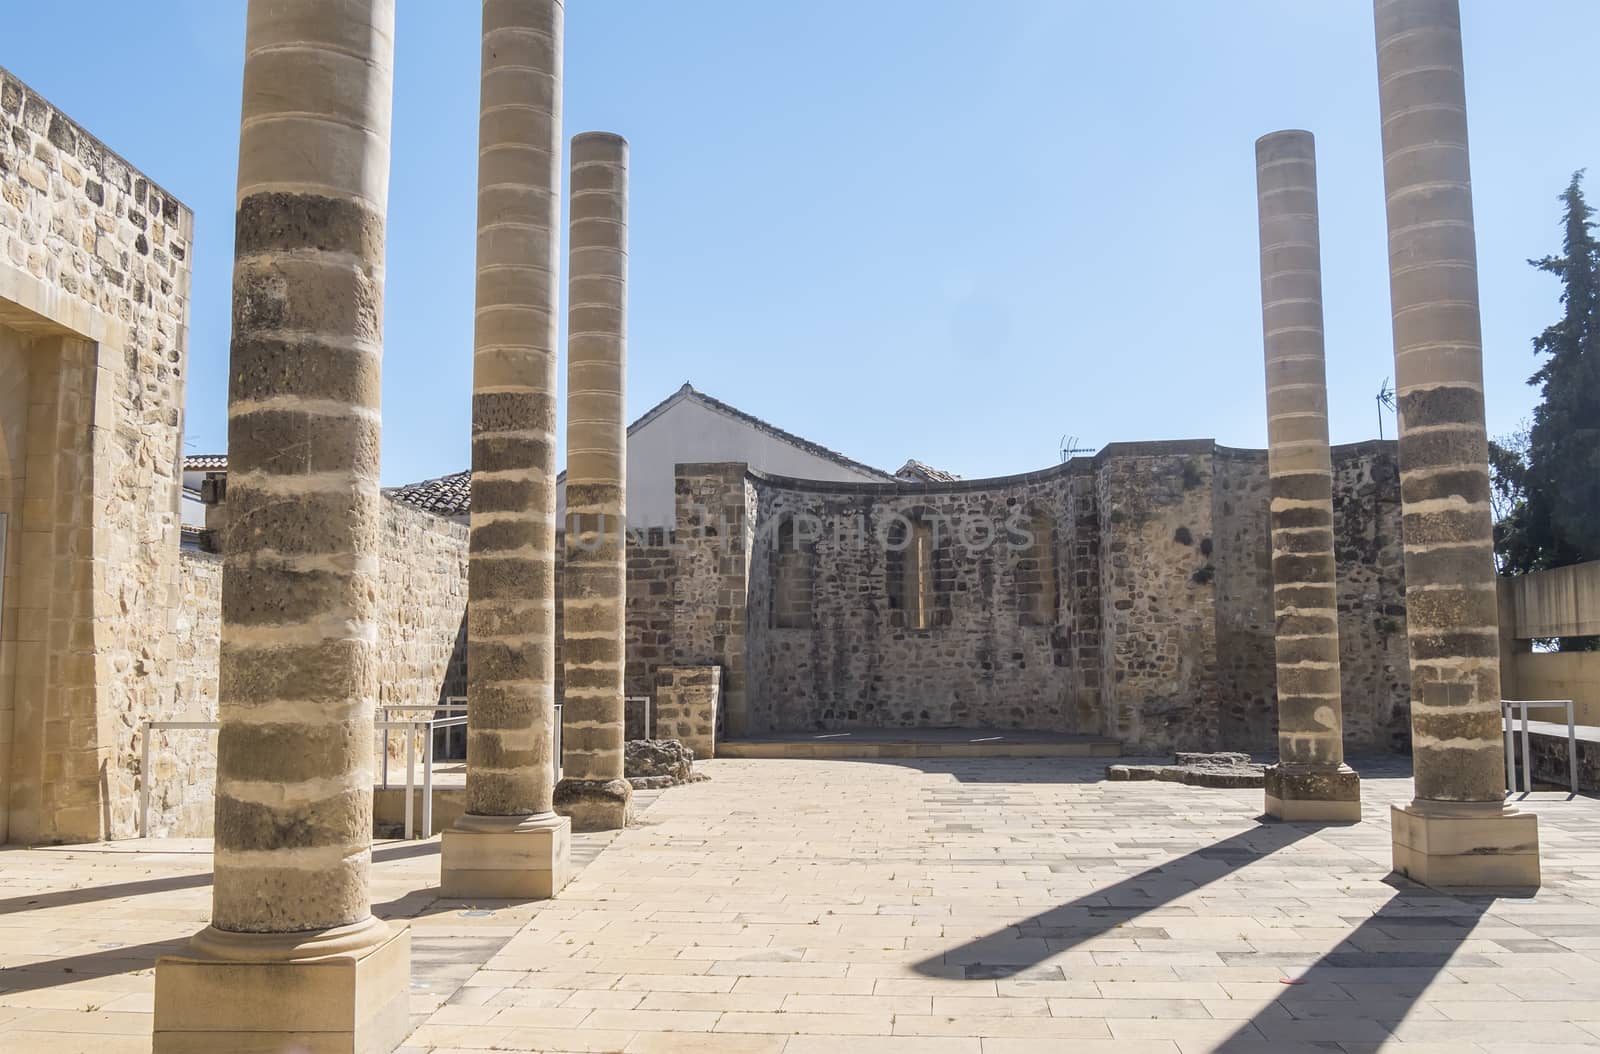 Remains of the Romanesque church of San Juan Bautista, Baeza, Jaen, Spain